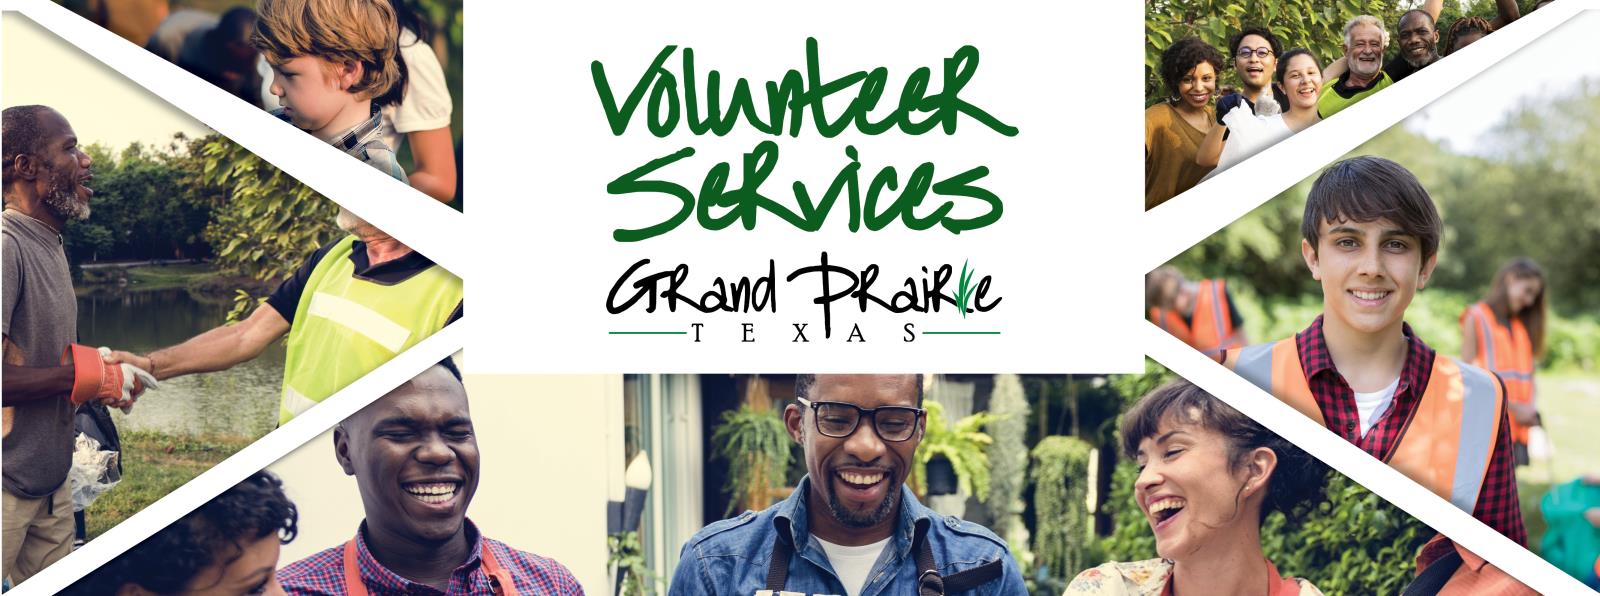 Grand Prairie Volunteer Services